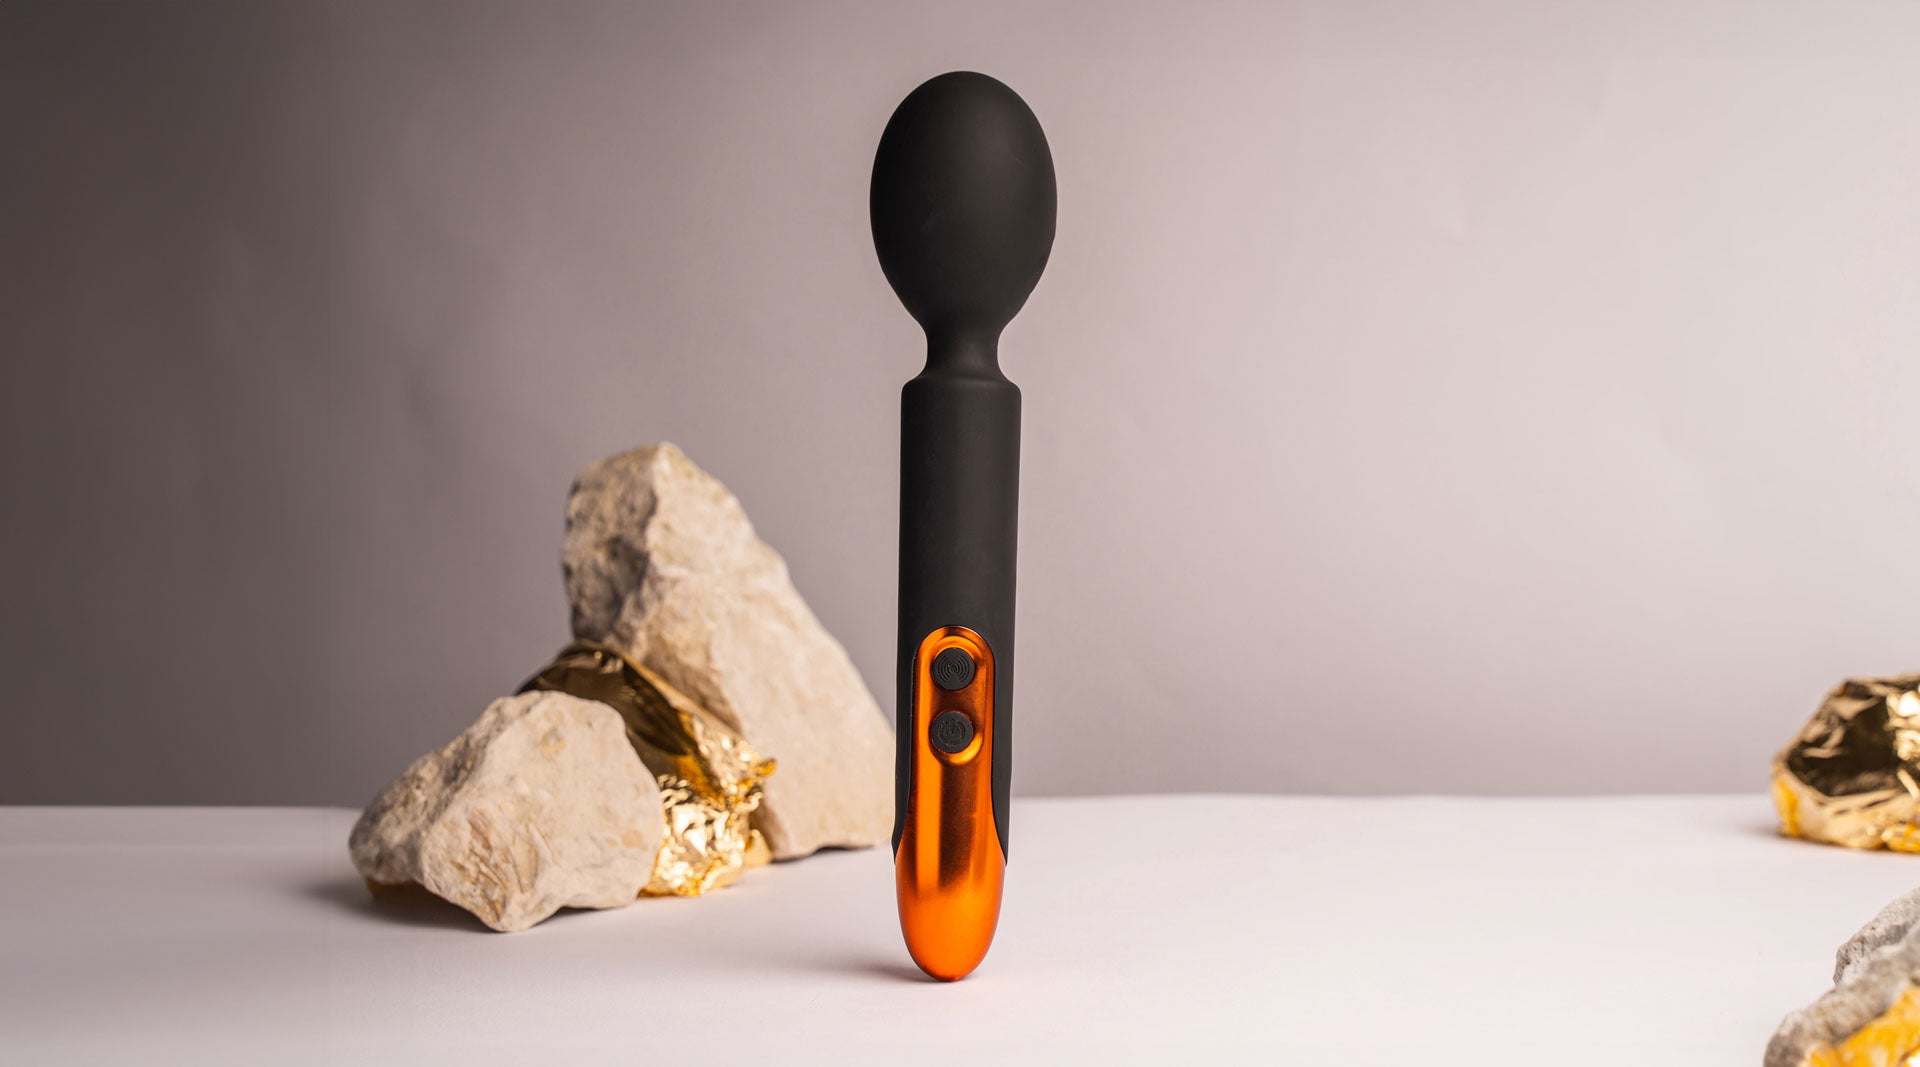 Silicone wand vibrator in black and copper.